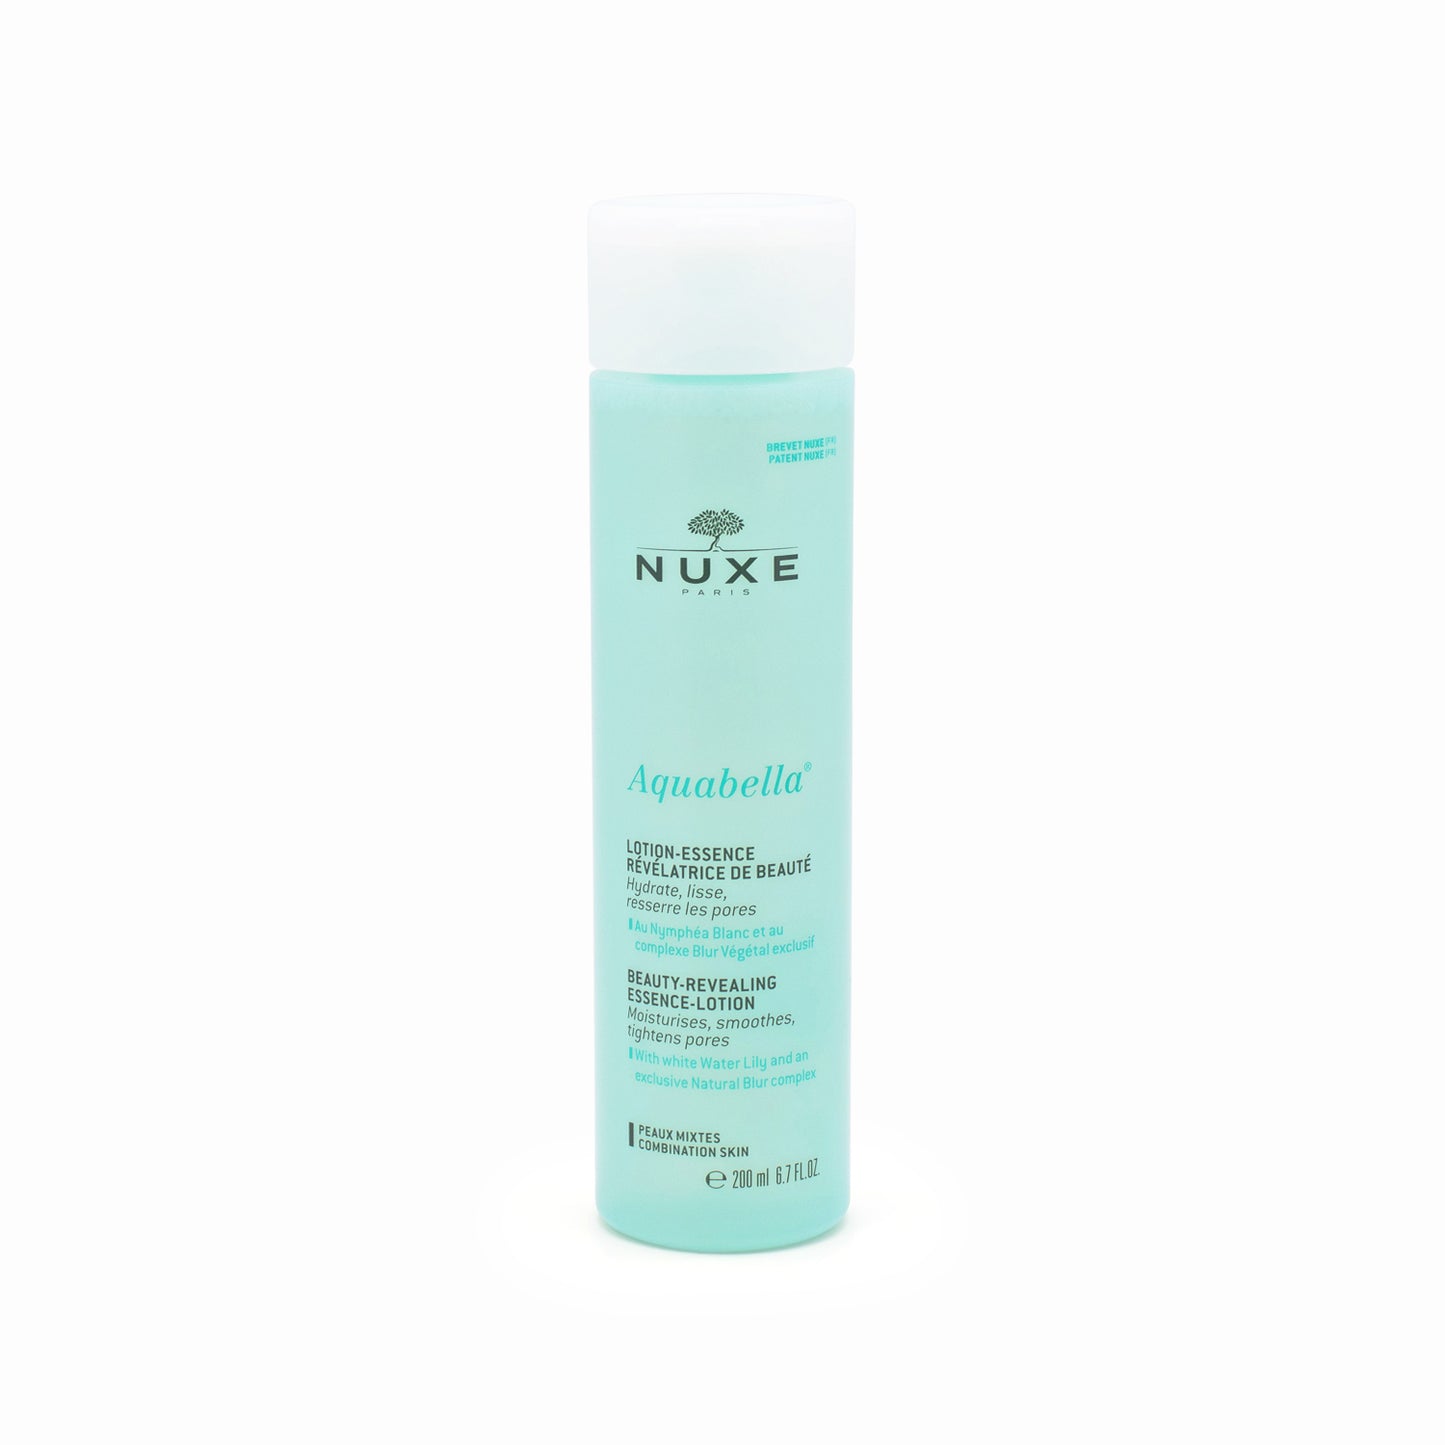 NUXE Aquabella Beauty-Revealing Essence-Lotion Combo Skin 6.7oz NEW